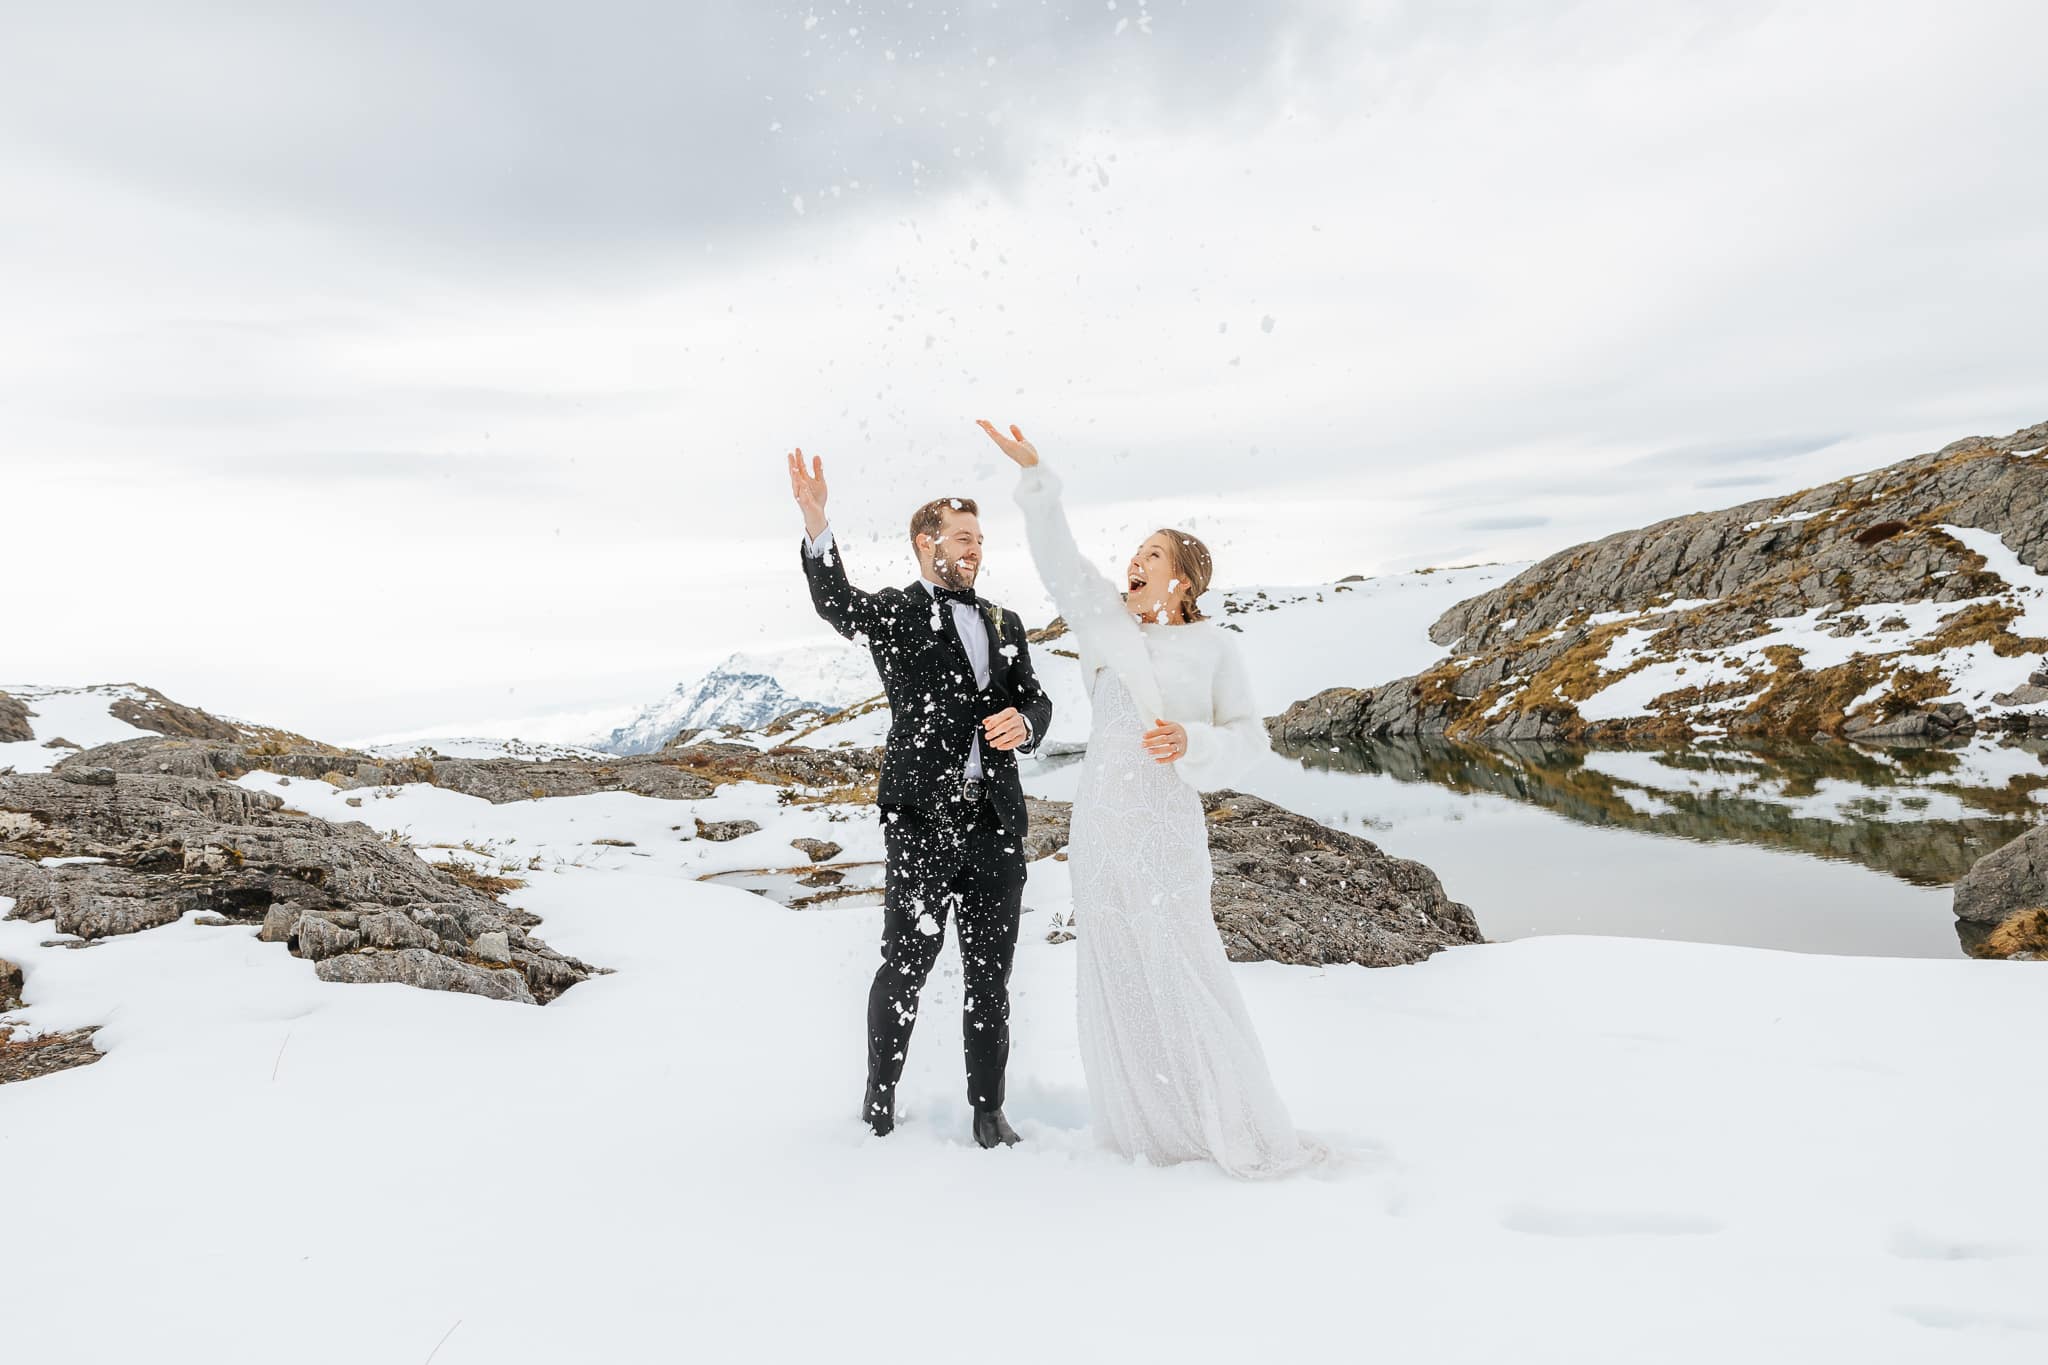 Luxury Elopement wedding in Queenstown New Zealand with helicopter wedding on glacier